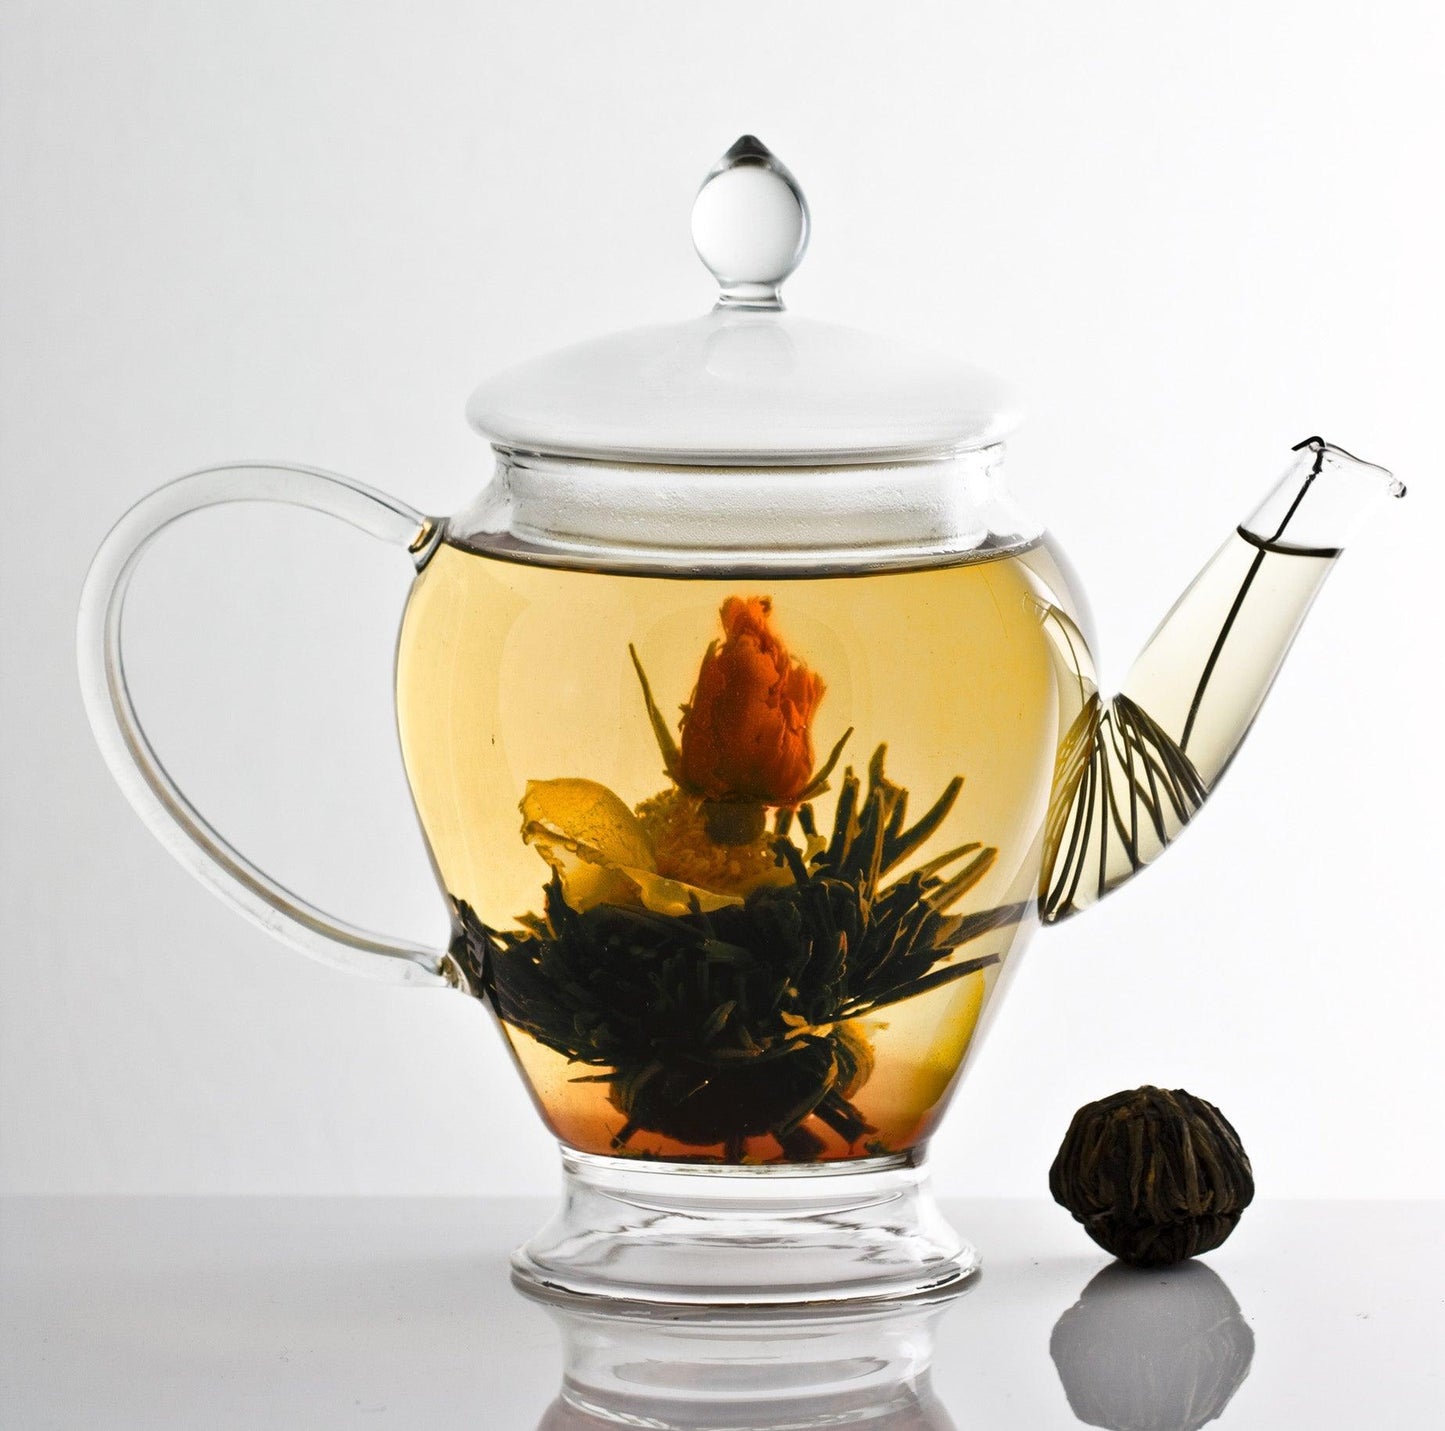 Delicate taste to your chai tea?